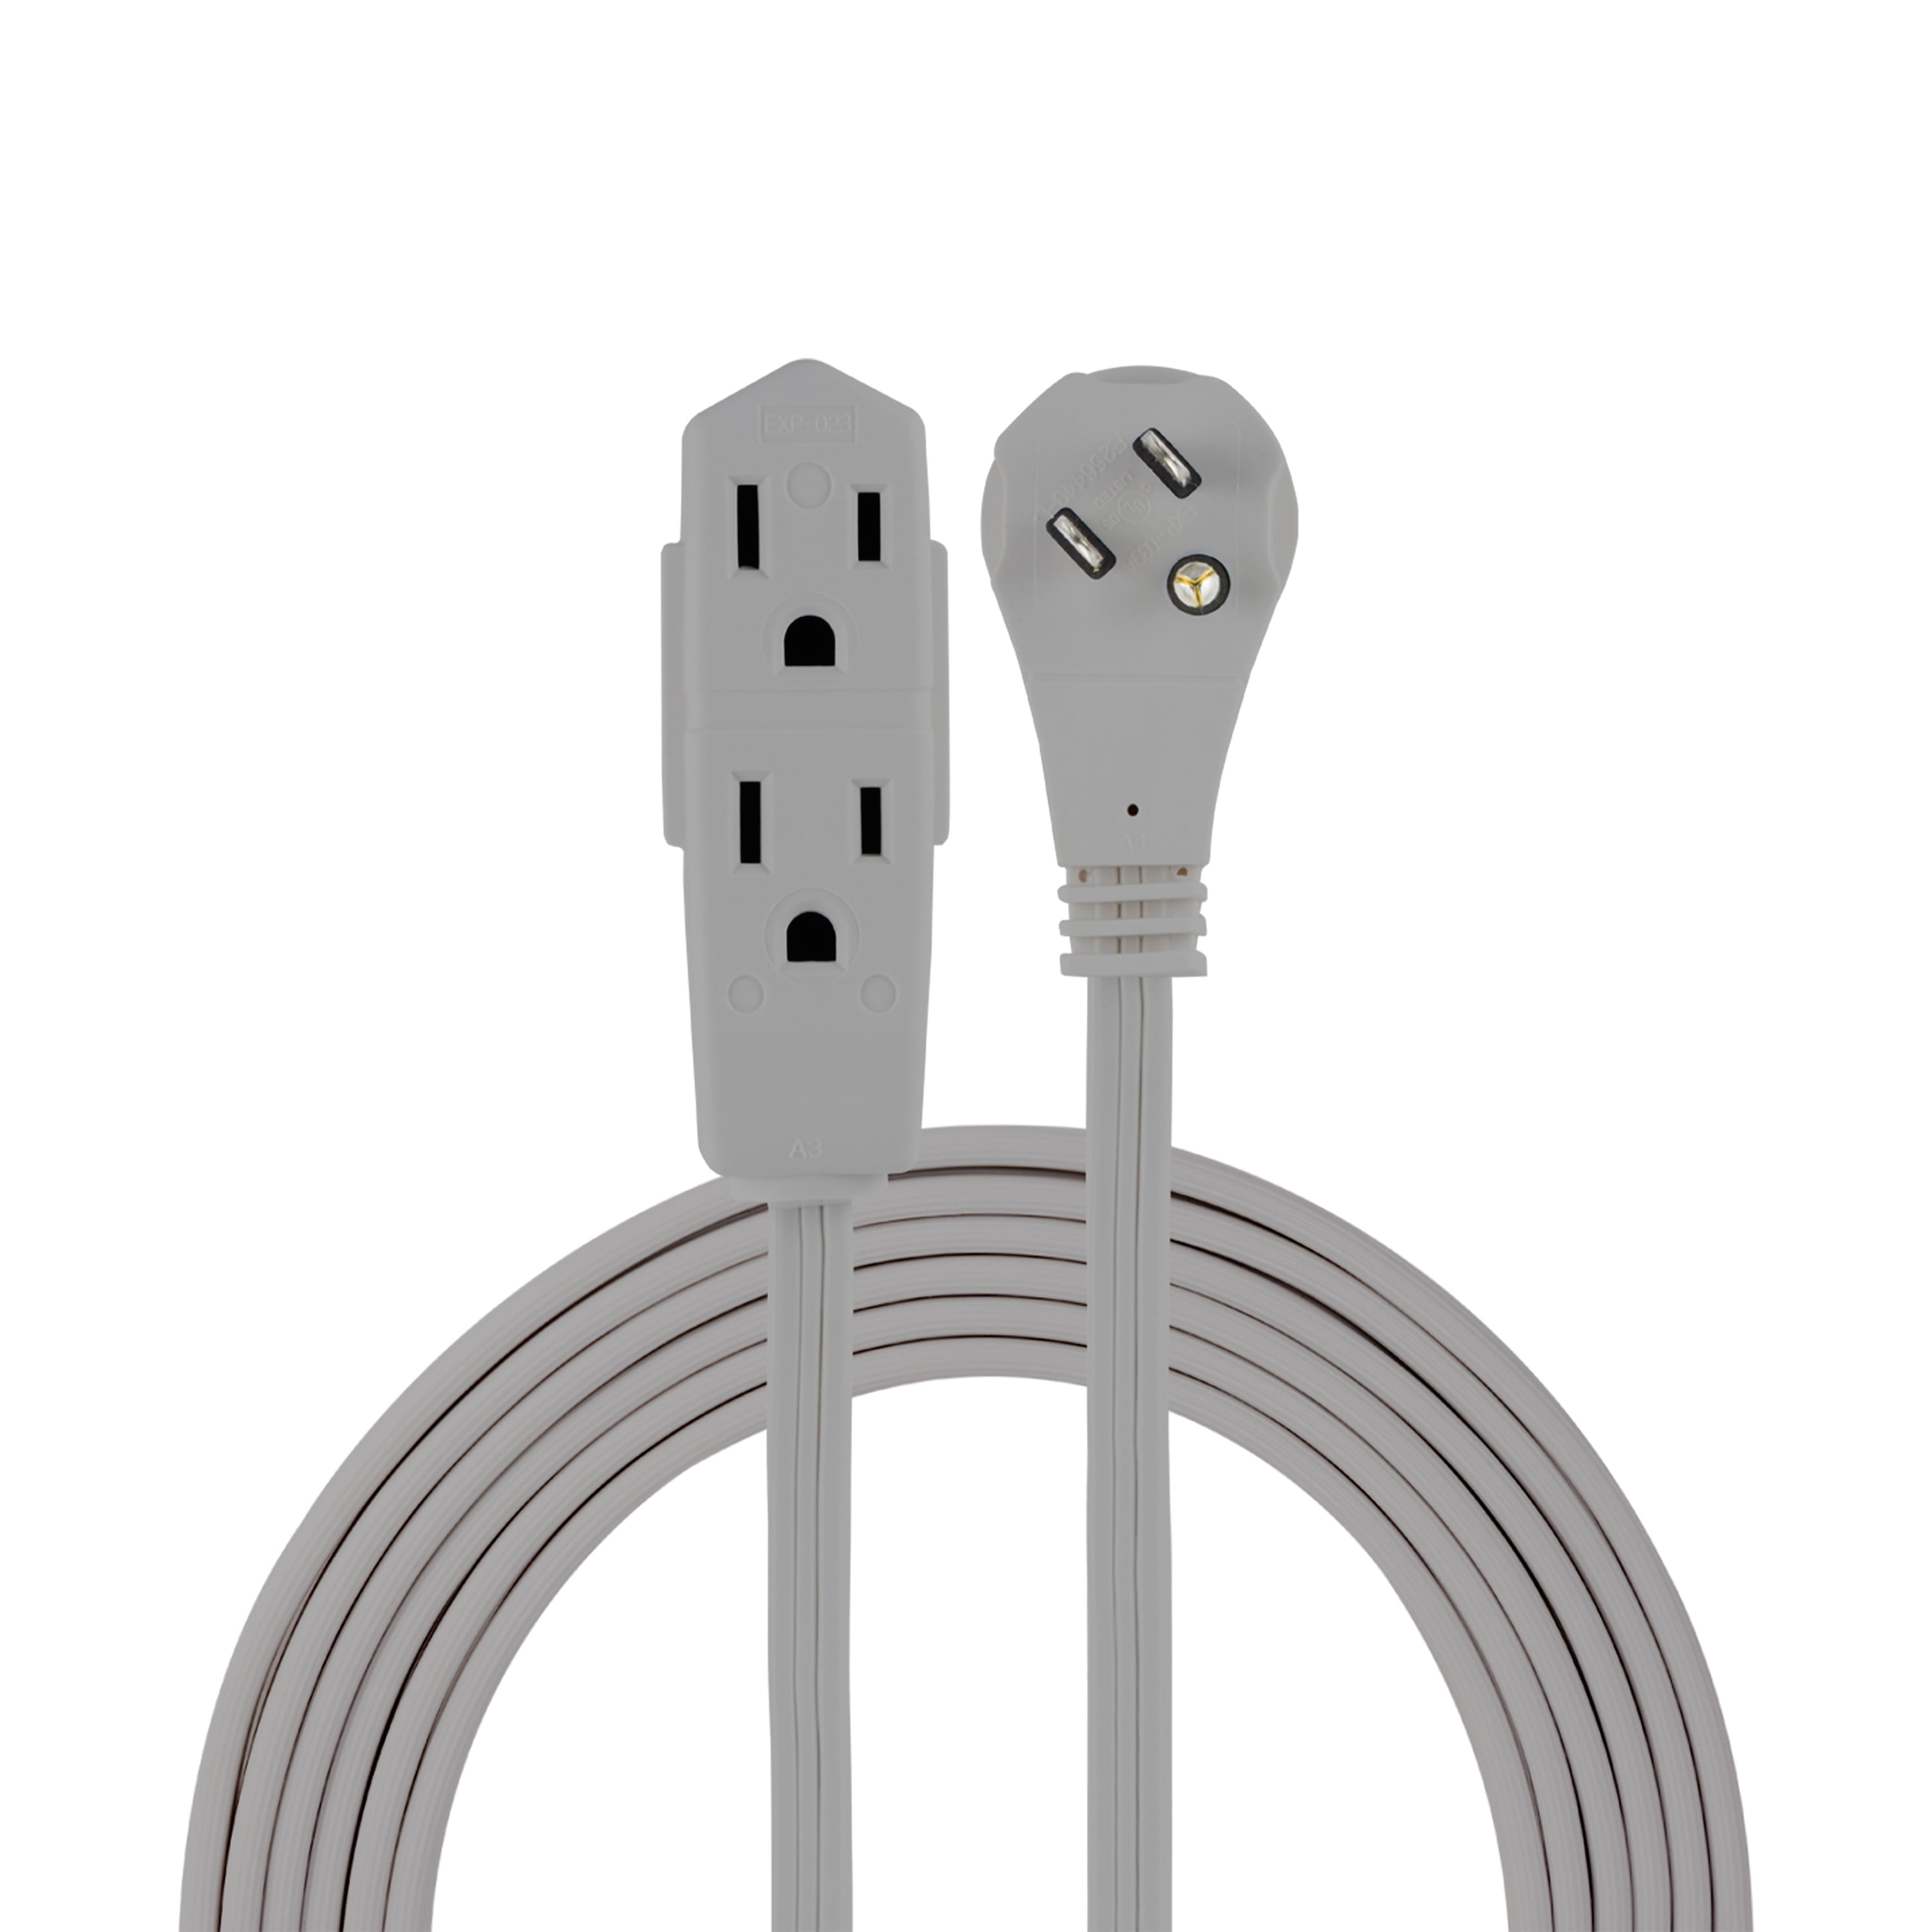 GE 3-Outlet Extension Cord, 25ft., Gray – 43025 - Walmart.com - Walmart.com